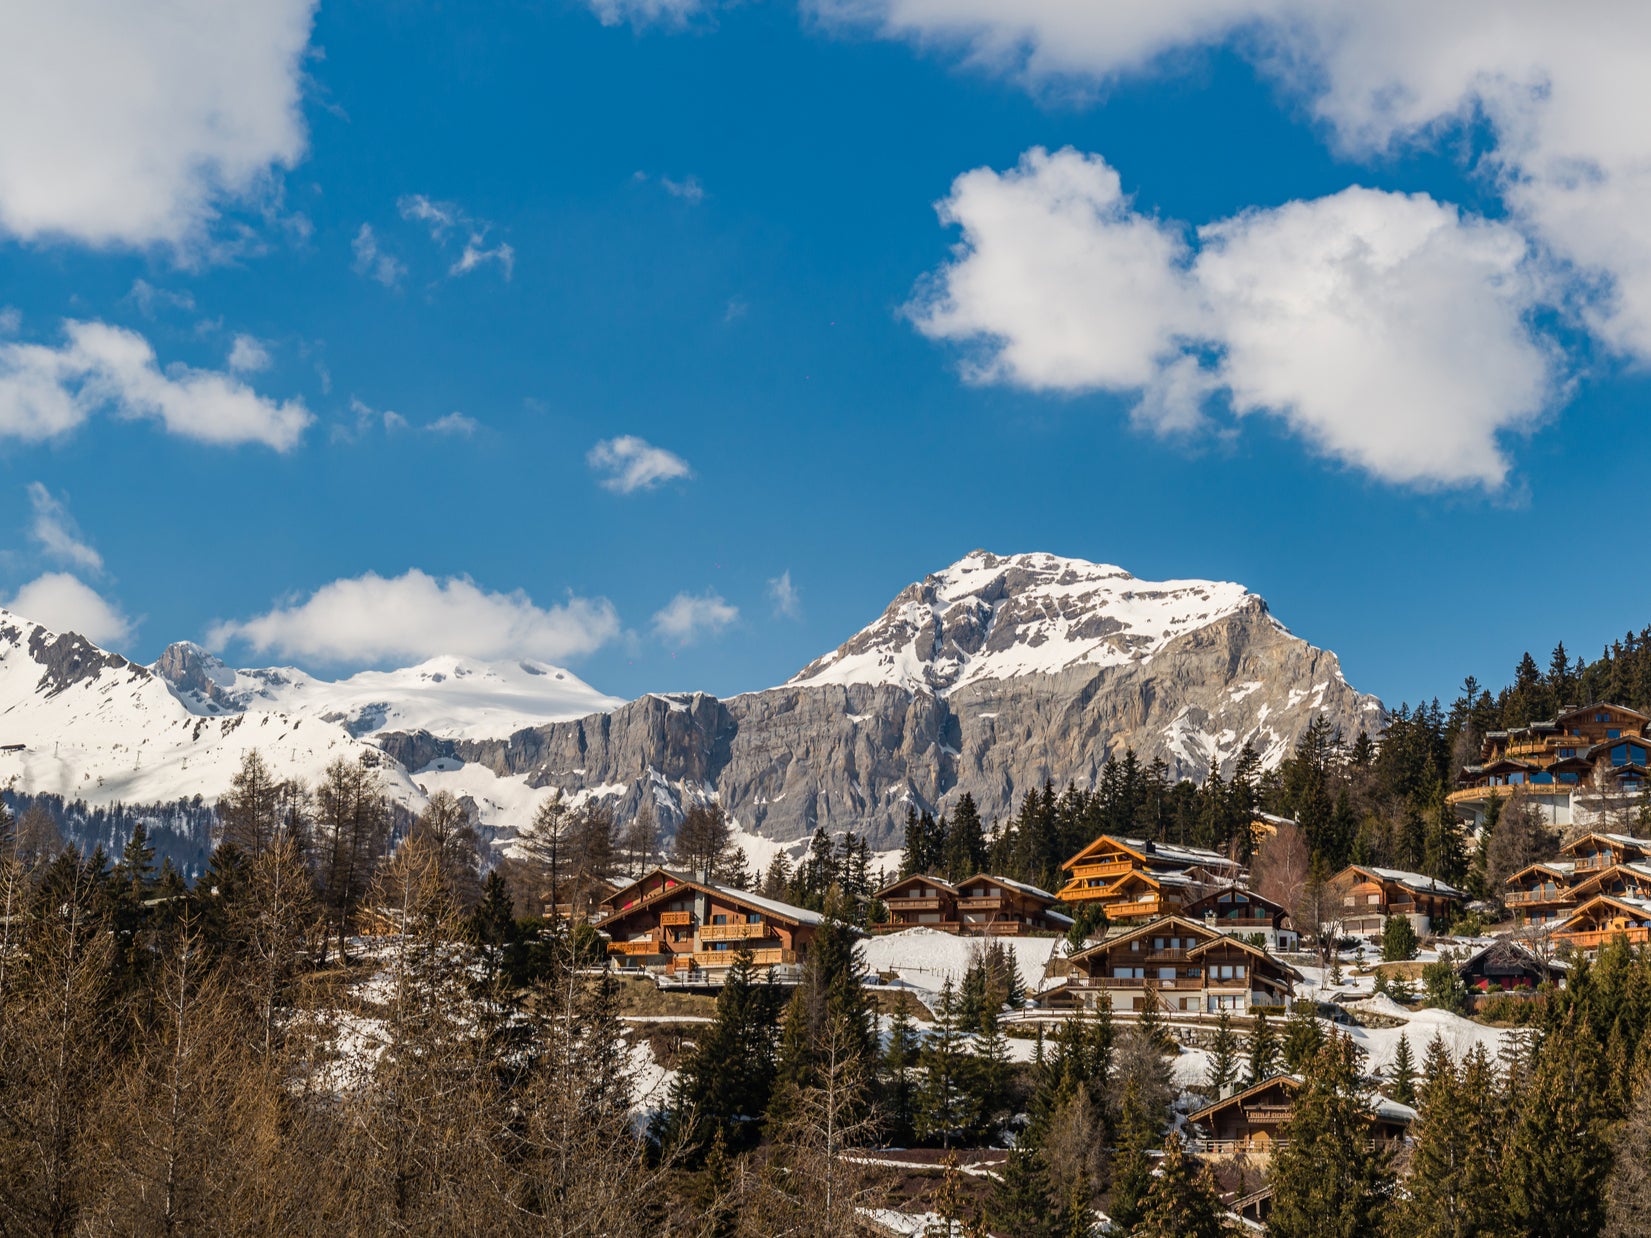 The Swiss village’s ski resort overlooks the Rhone River valley